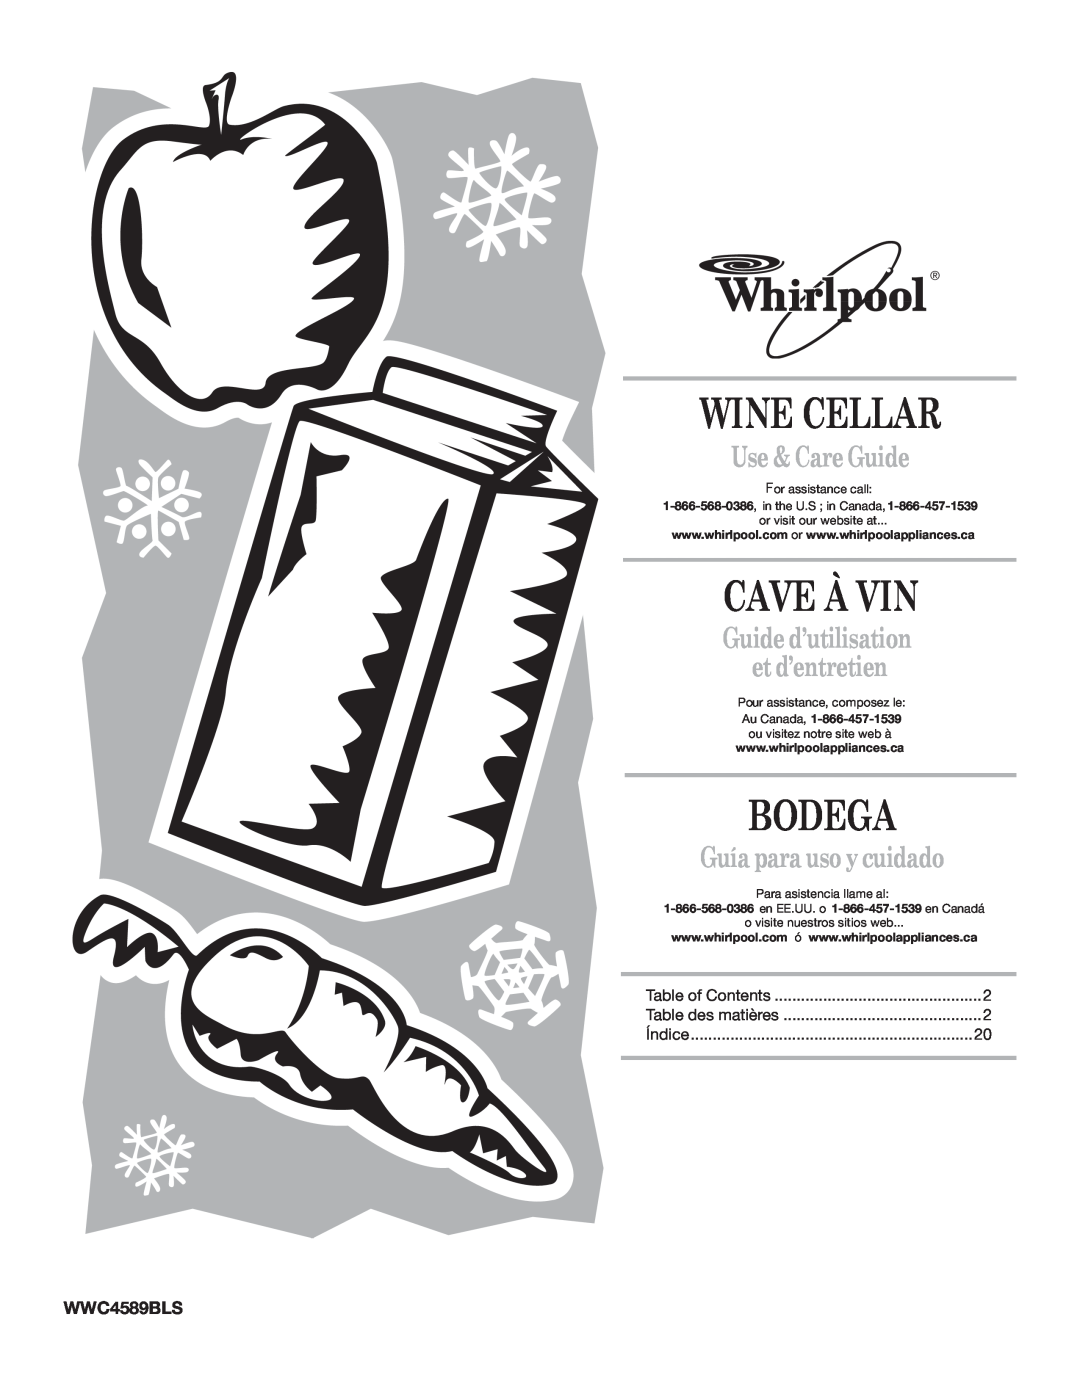 Whirlpool WWC4589BLS manual Bodega, Wine Cellar, Cave À Vin, Use&CareGuide, Guided’utilisation, et d’entretien 